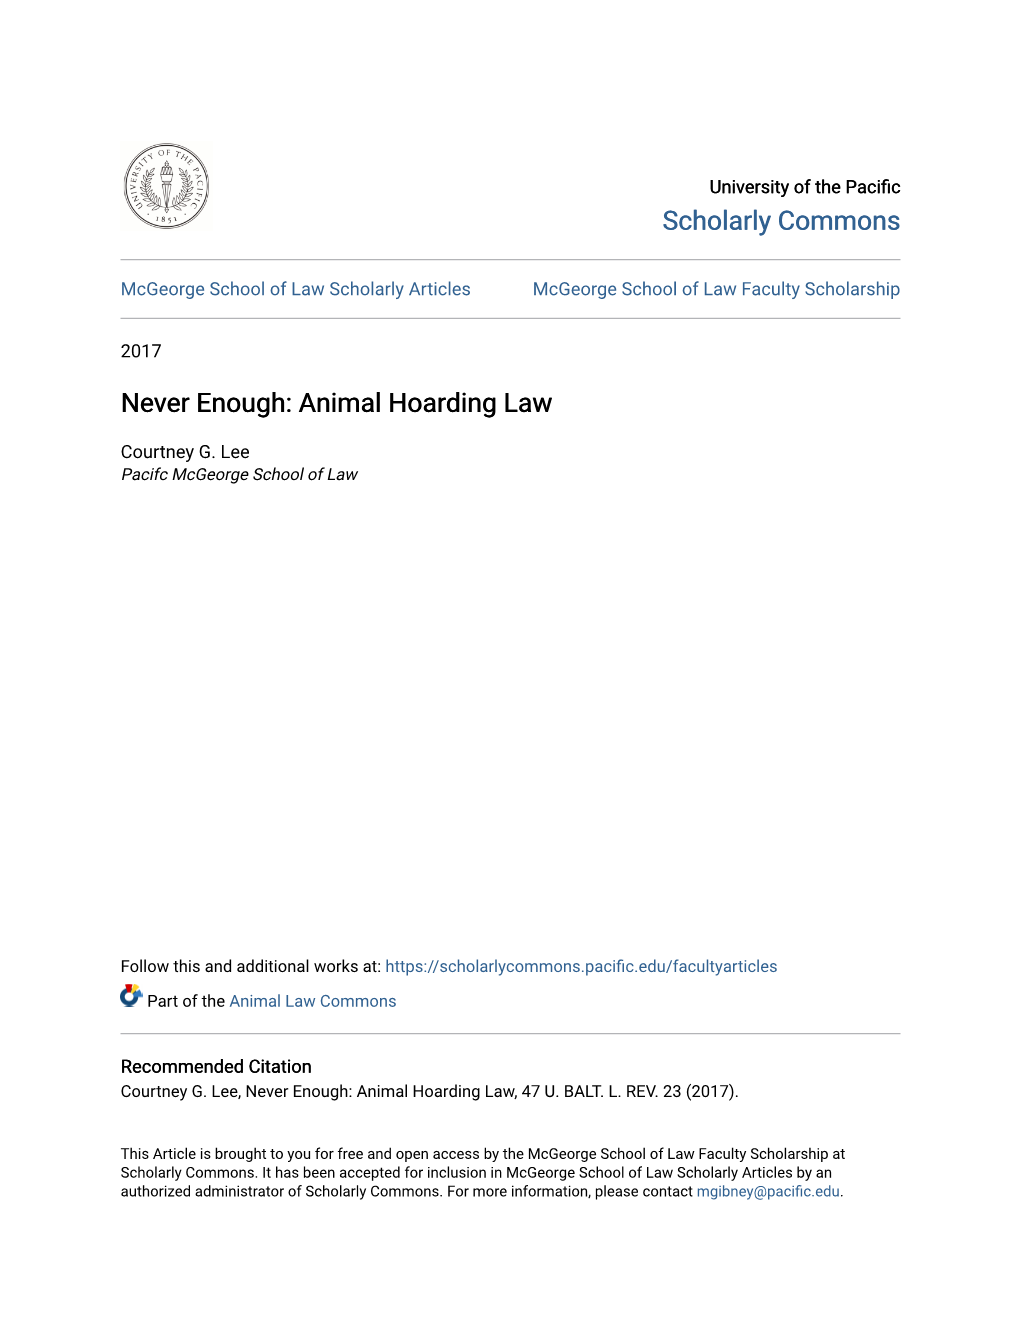 Animal Hoarding Law